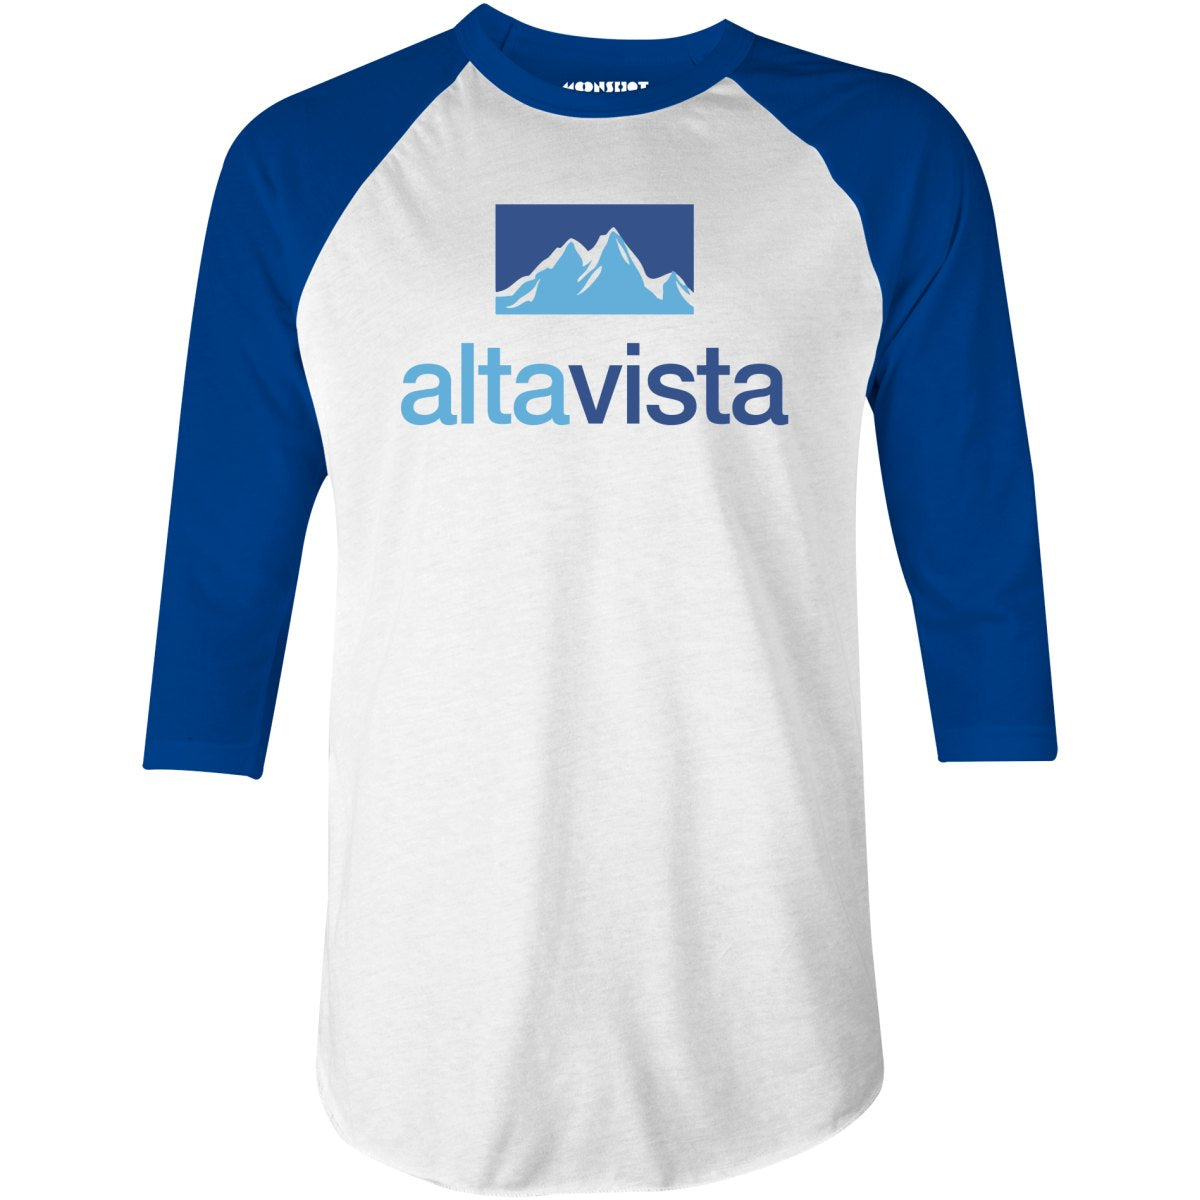 Alta Vista - Vintage Internet - 3/4 Sleeve Raglan T-Shirt